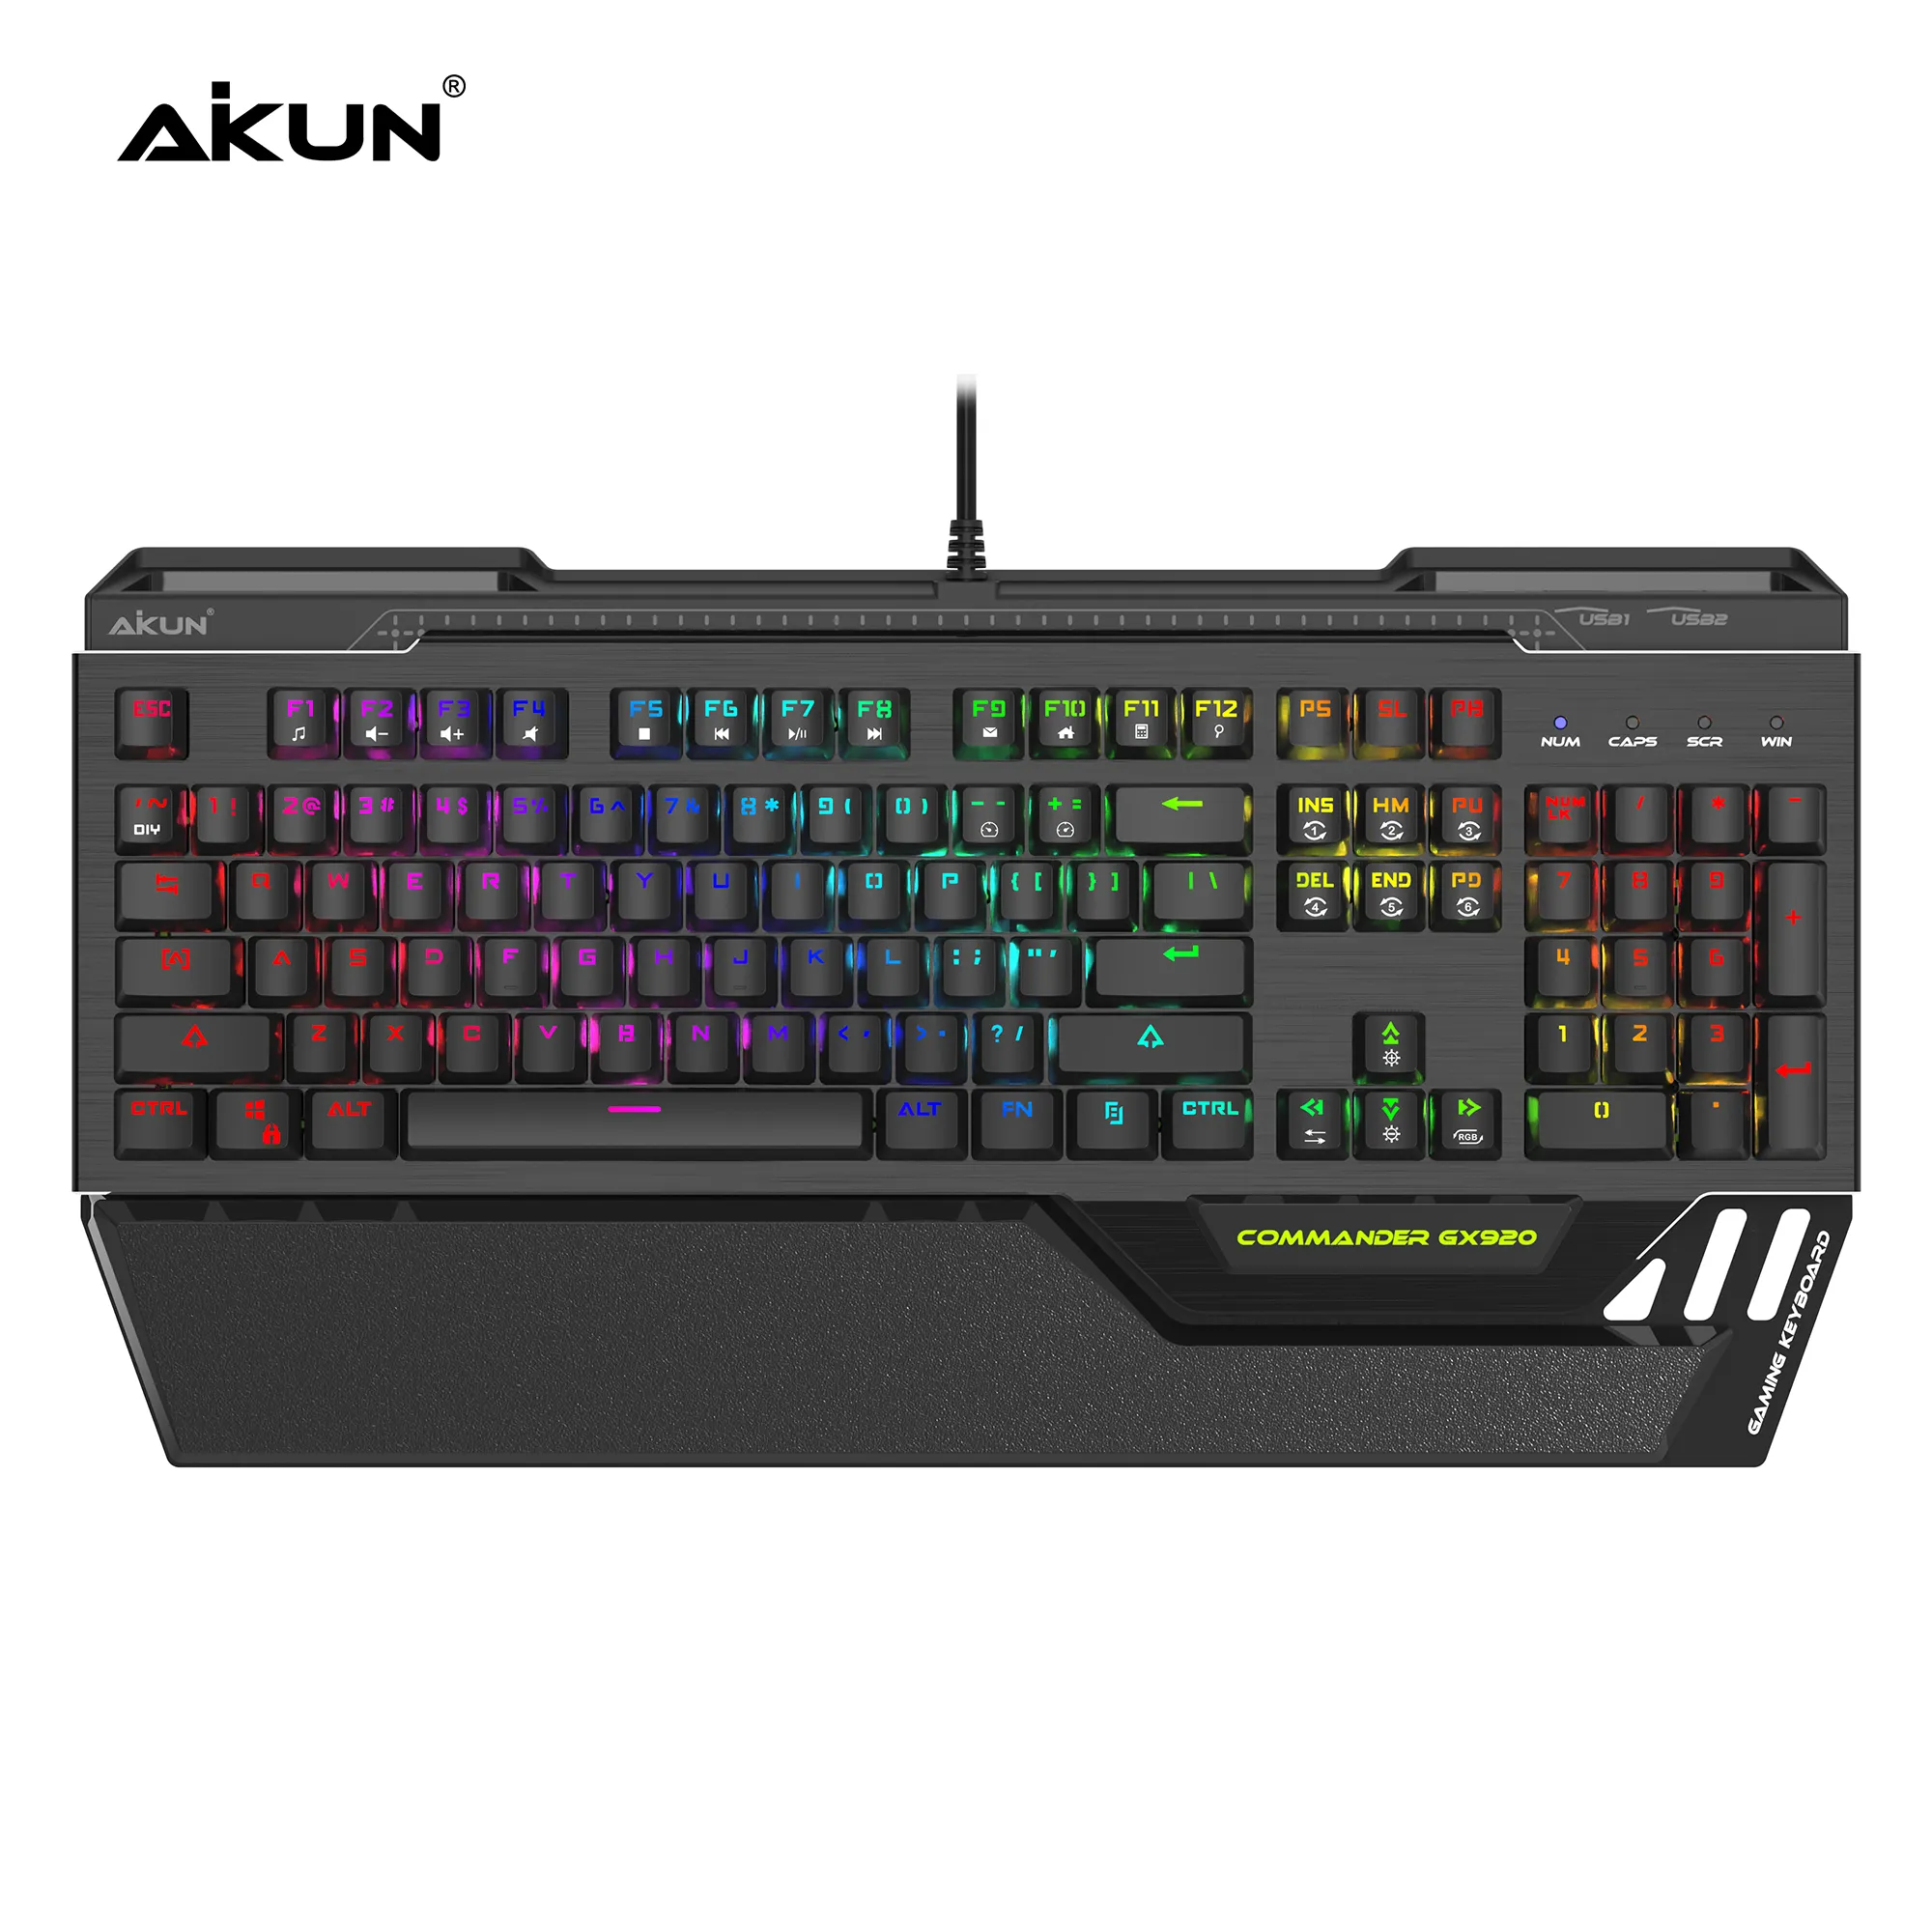 AIKUN GX920 Wired RGB Backlight Gaming Keyboard Mechanical Switches Multimedia Full Size Keyboards Two USB Hub Black